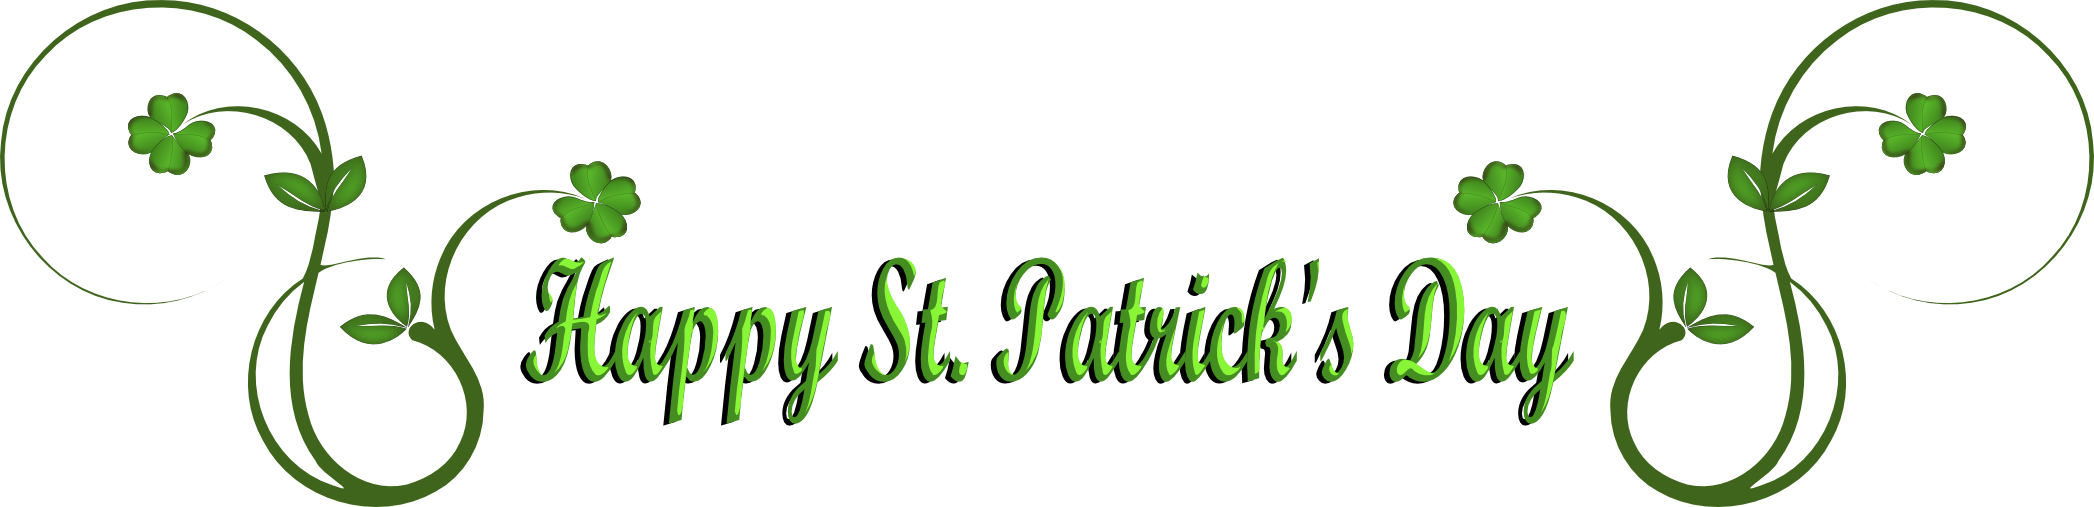 St Patricks Day Celebrating My Irish Heritage Clipart